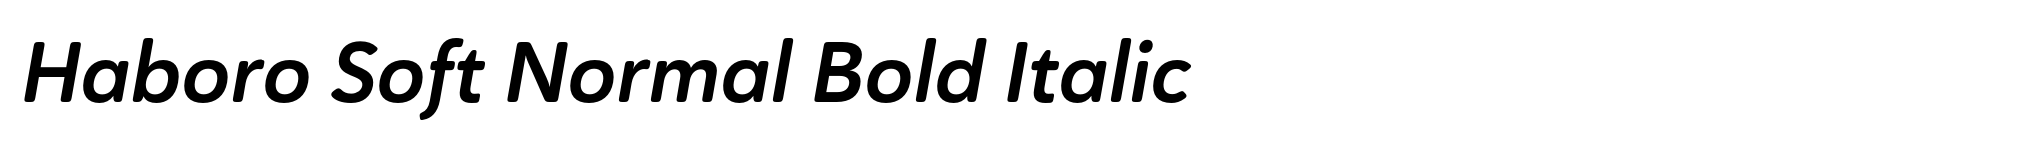 Haboro Soft Normal Bold Italic image